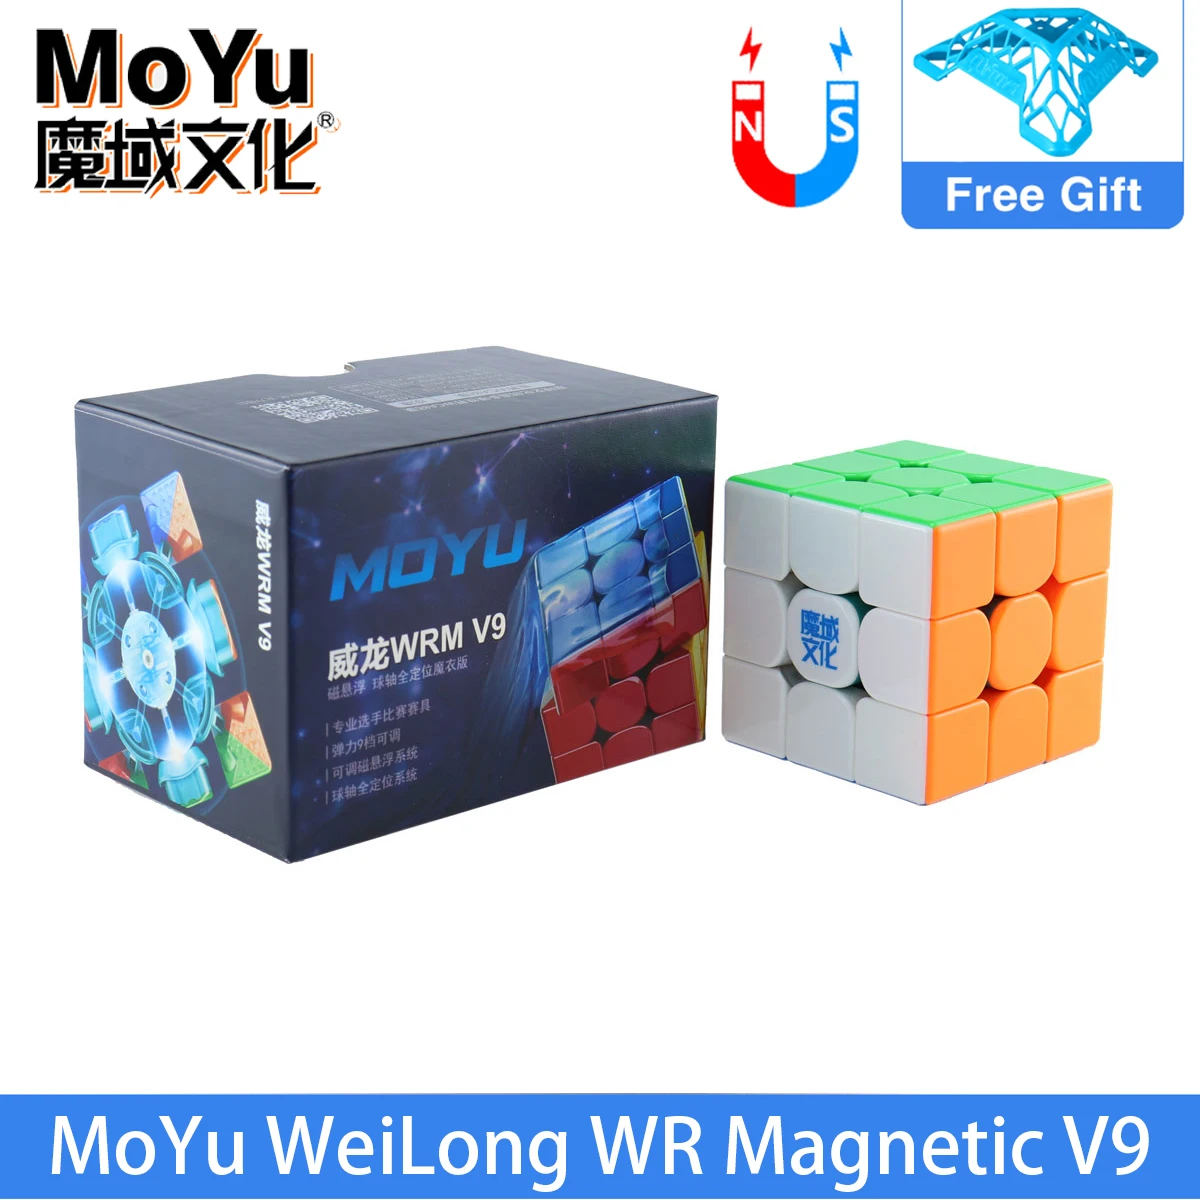 

MoYu WeiLong WRM V9 Ball Core UV 3x3 Magic Speed Cube Professional MoYu WeiLong WR M V9 Maglev 3x3x3 Cubo Magico Puzzle Toys